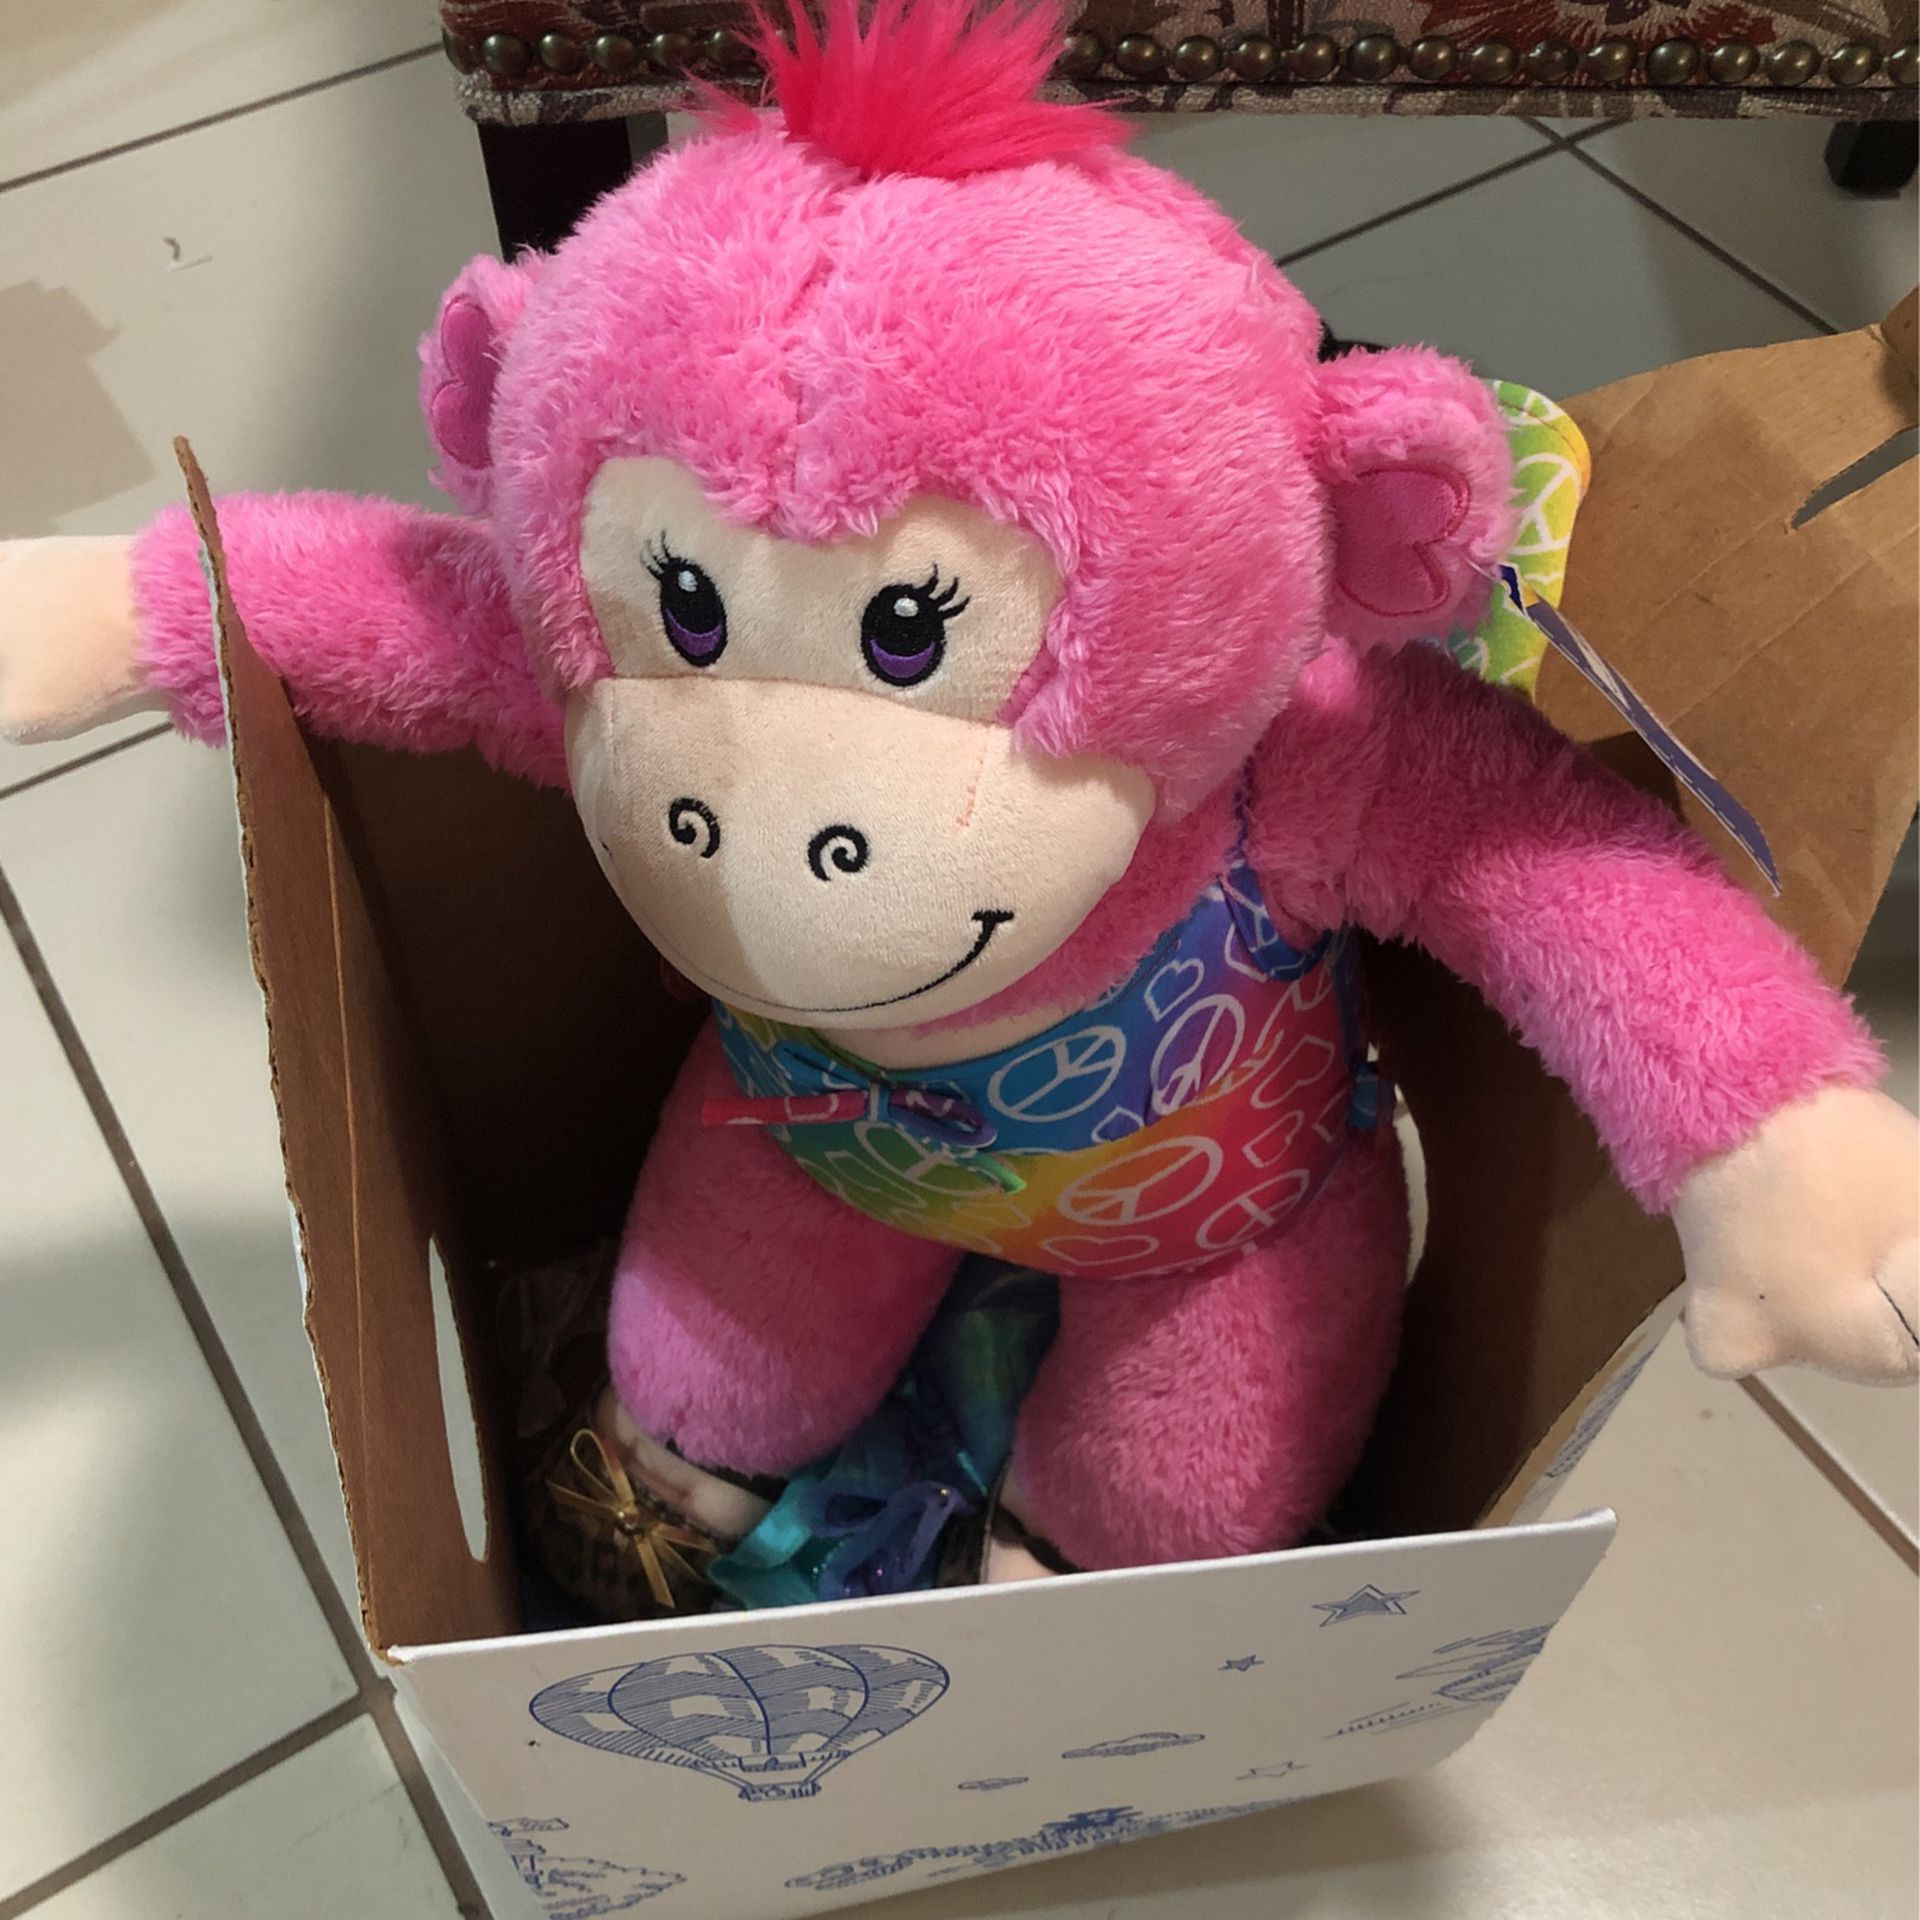 Monkey Build A Bear Pink Monkey Madison